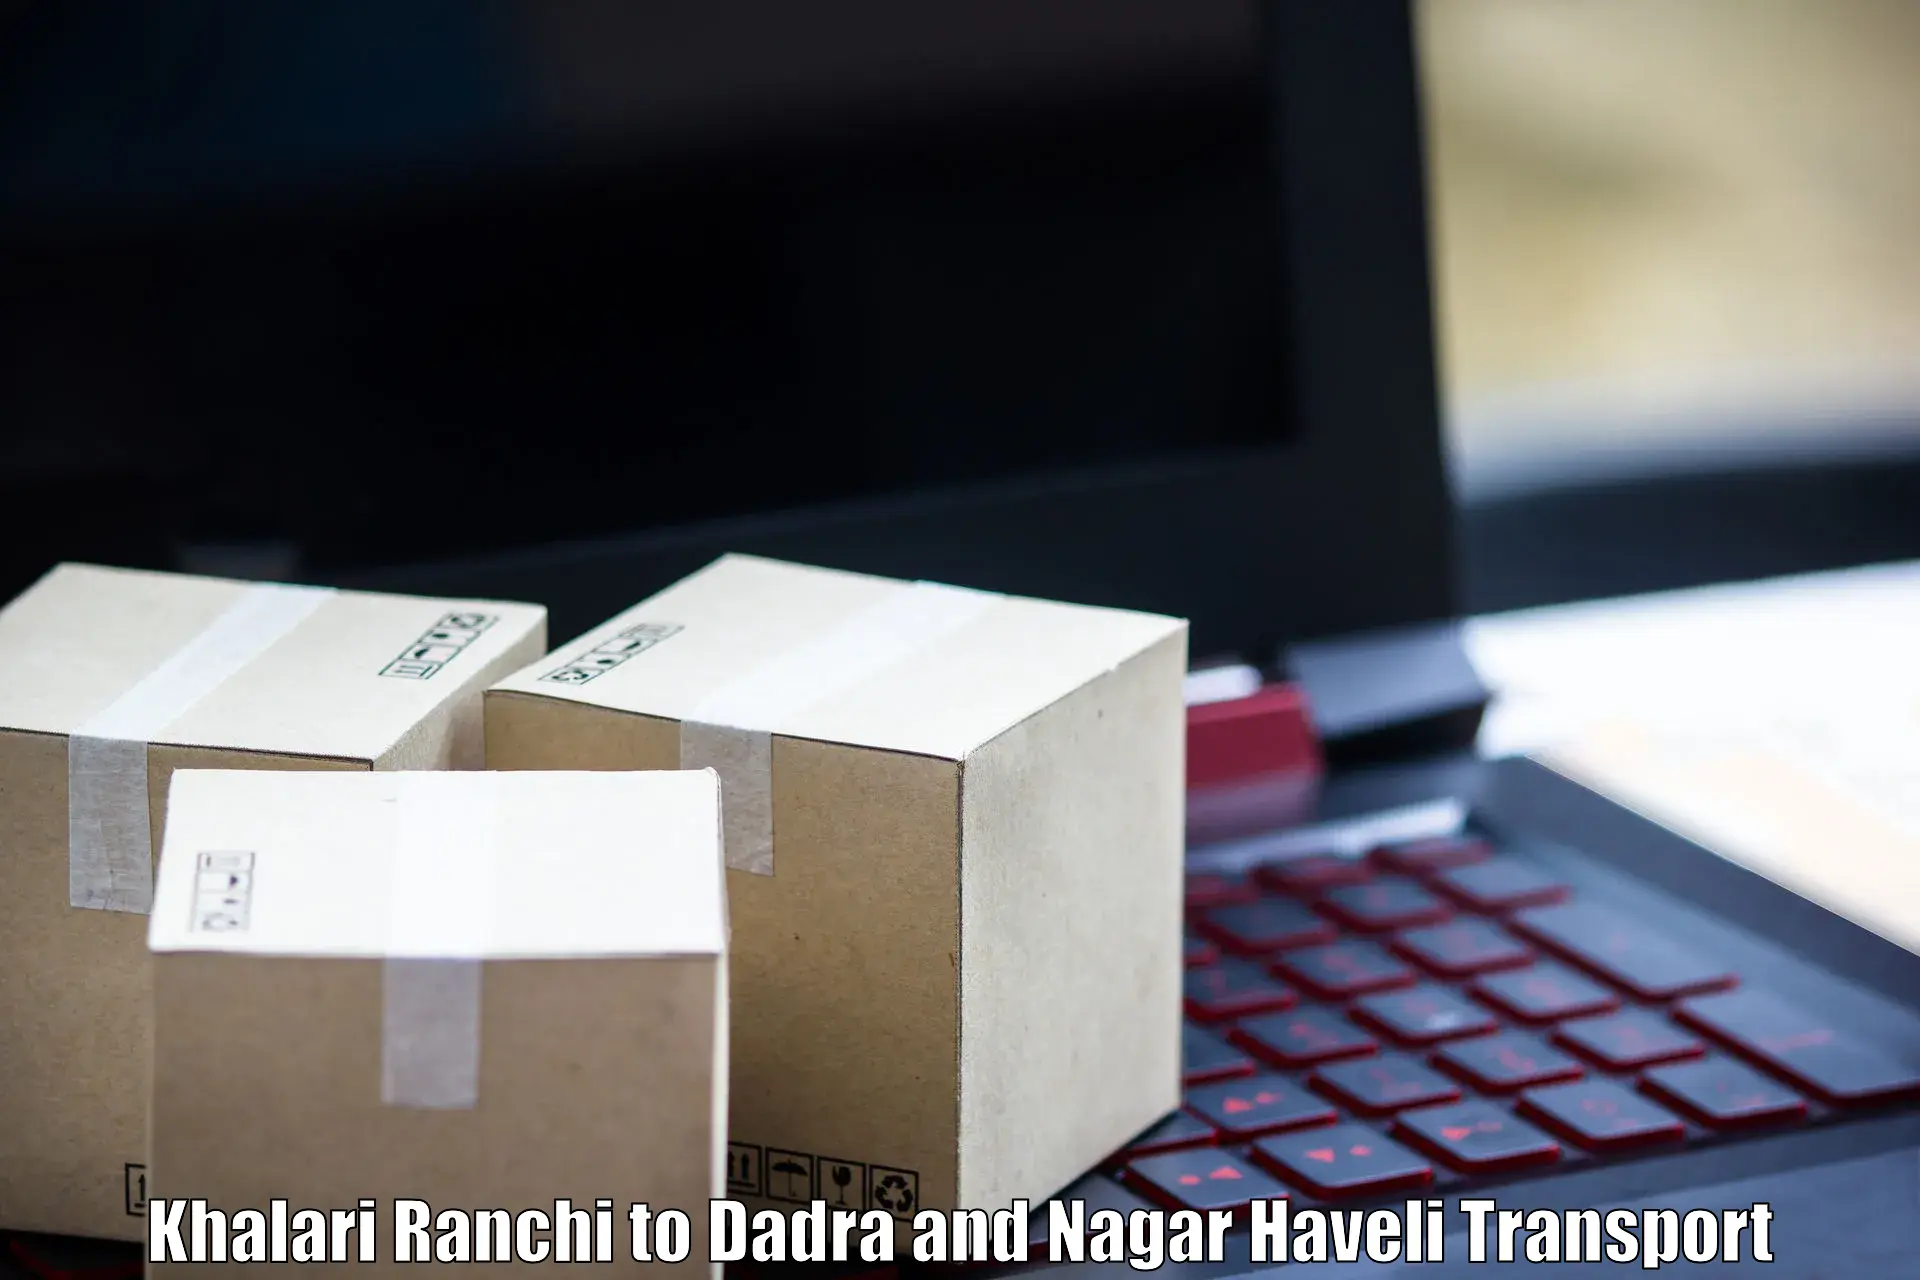 Online transport service Khalari Ranchi to Silvassa